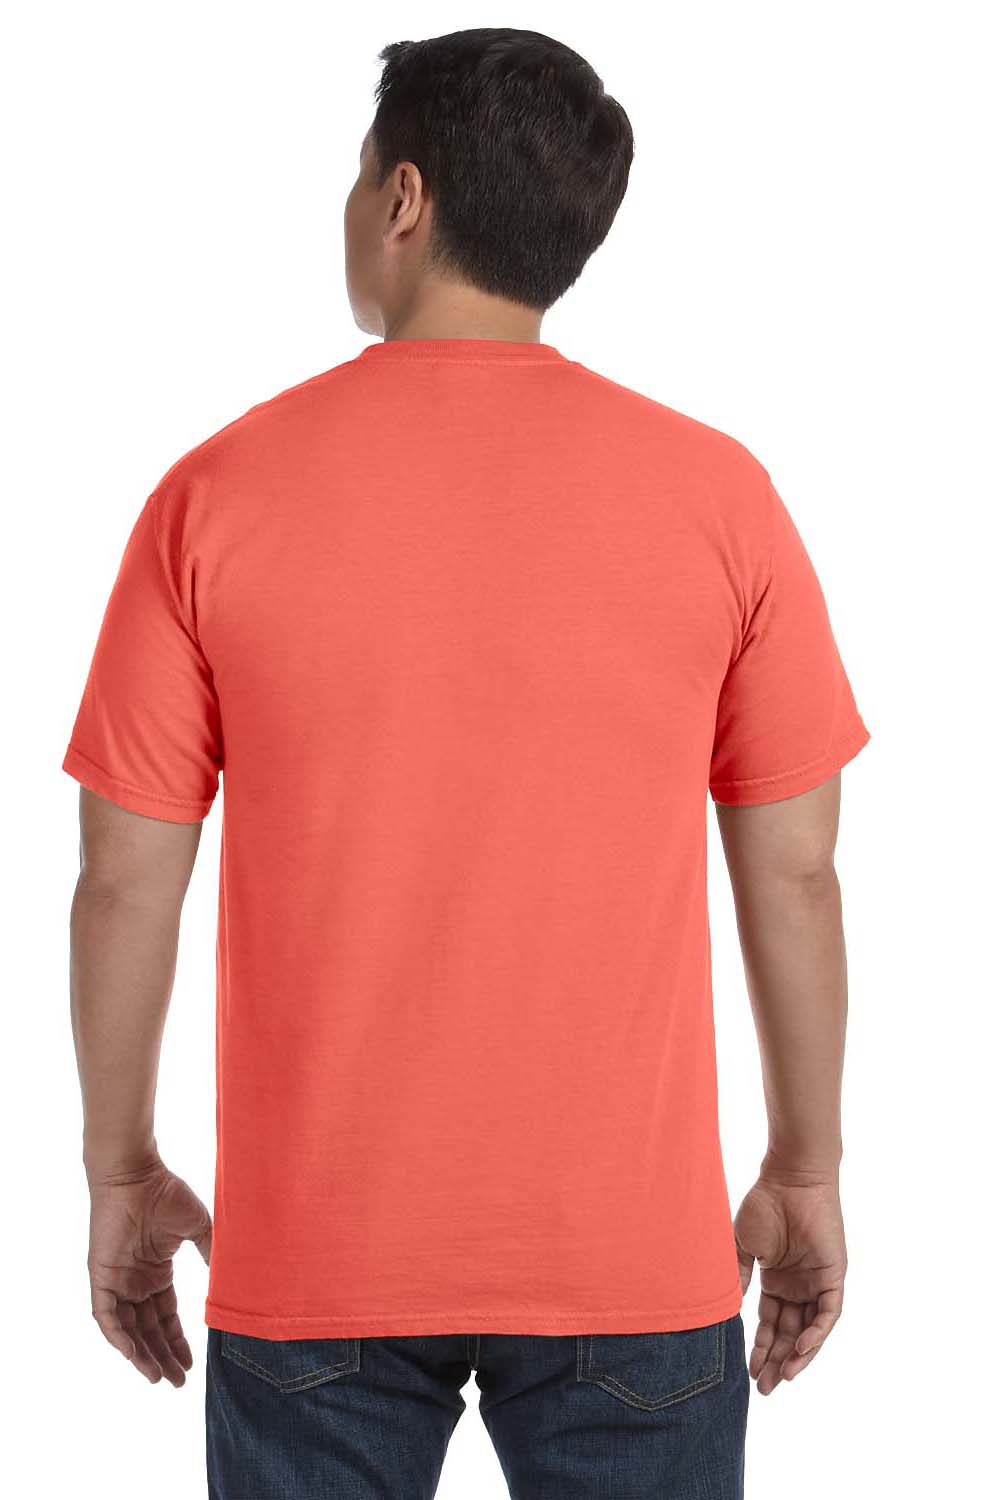 Comfort Colors C1717 Mens Short Sleeve Crewneck T-Shirt Bright Salmon Orange Back